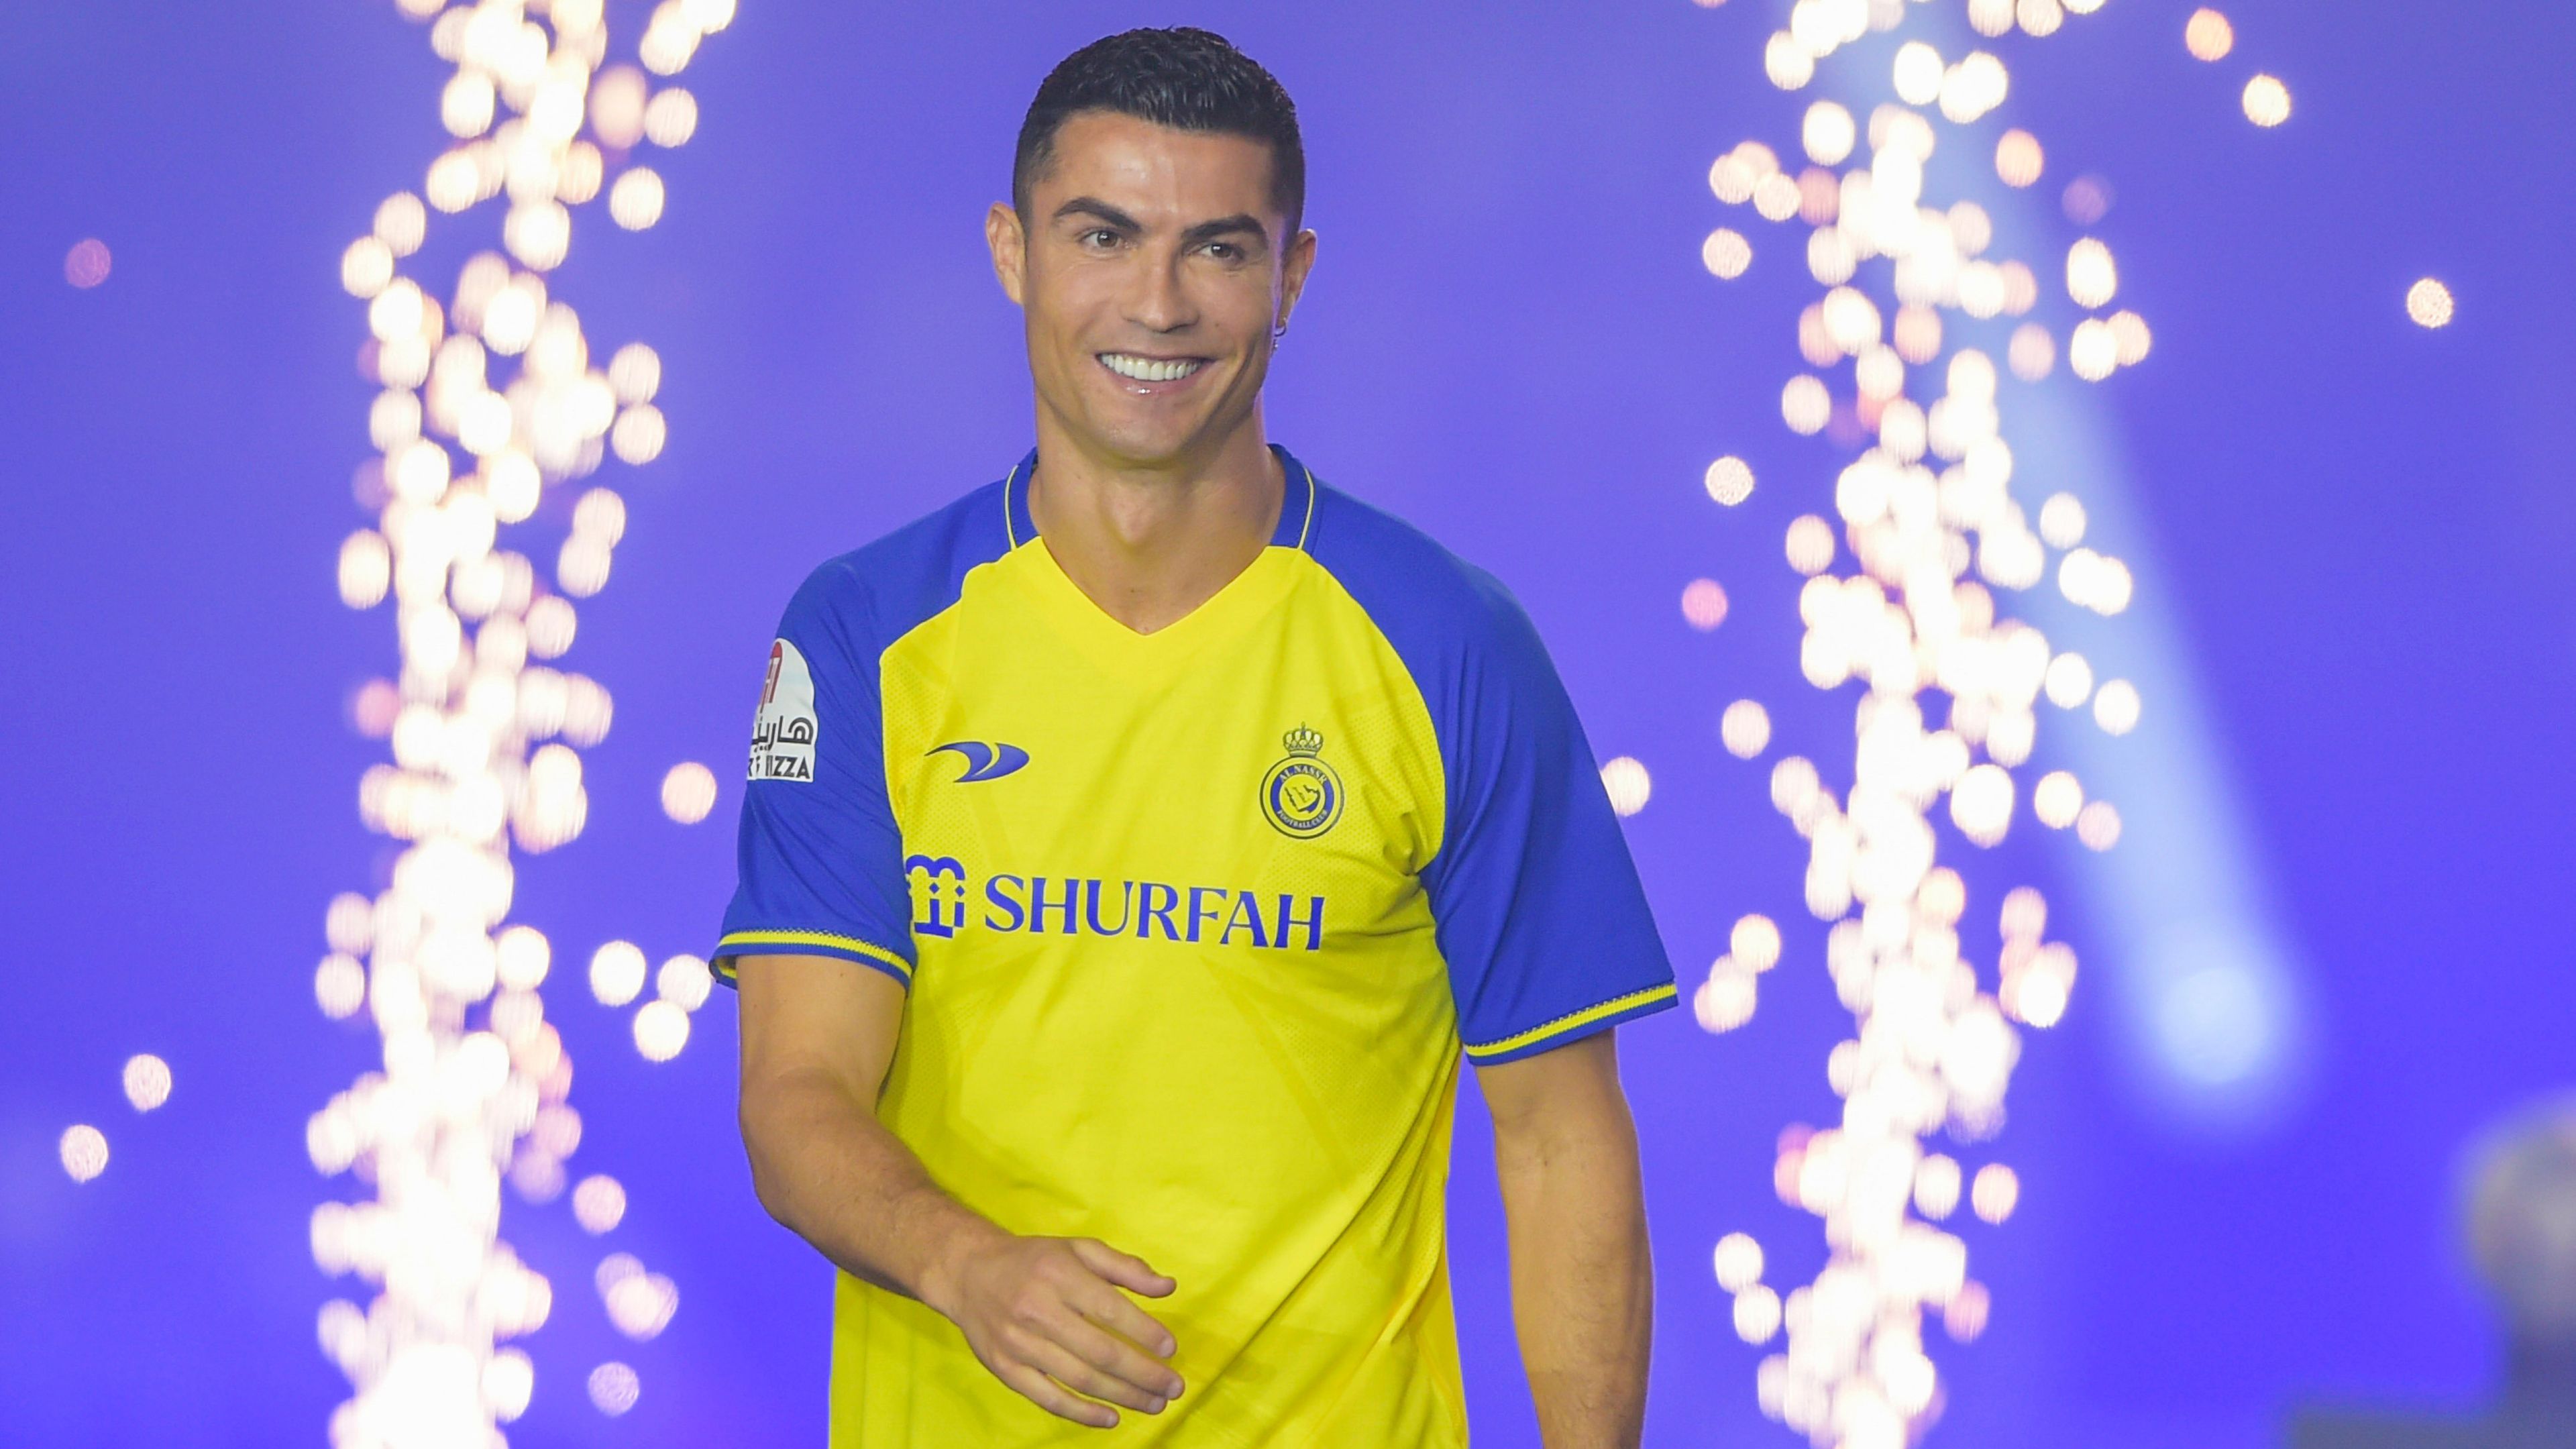 Cristiano Ronaldo's $310 million contract clause backs Saudi Arabia's bid to host FIFA World Cup